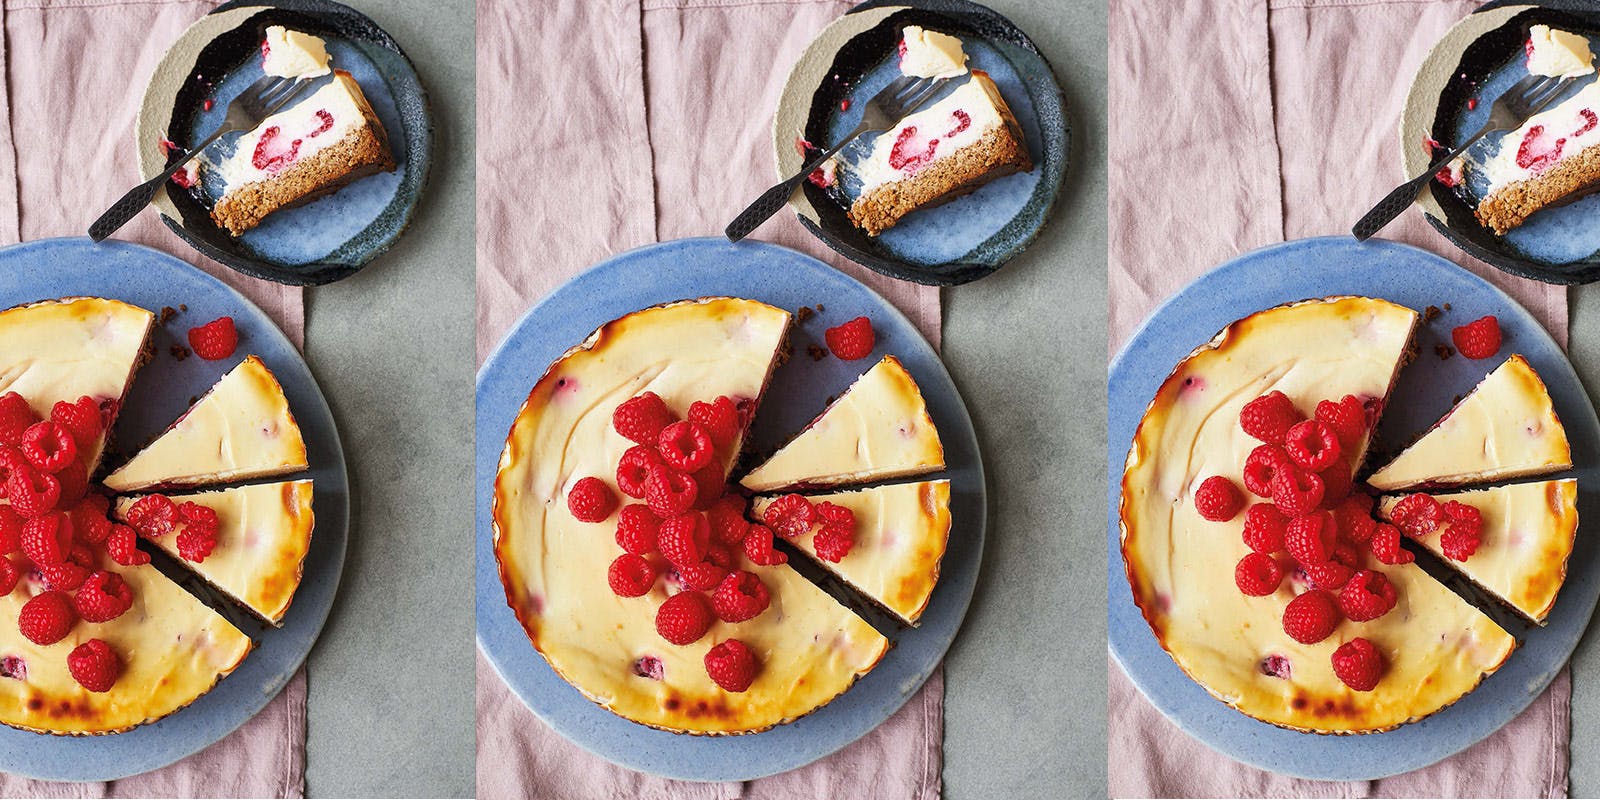 Raspberry and lemon ricotta baked cheesecake